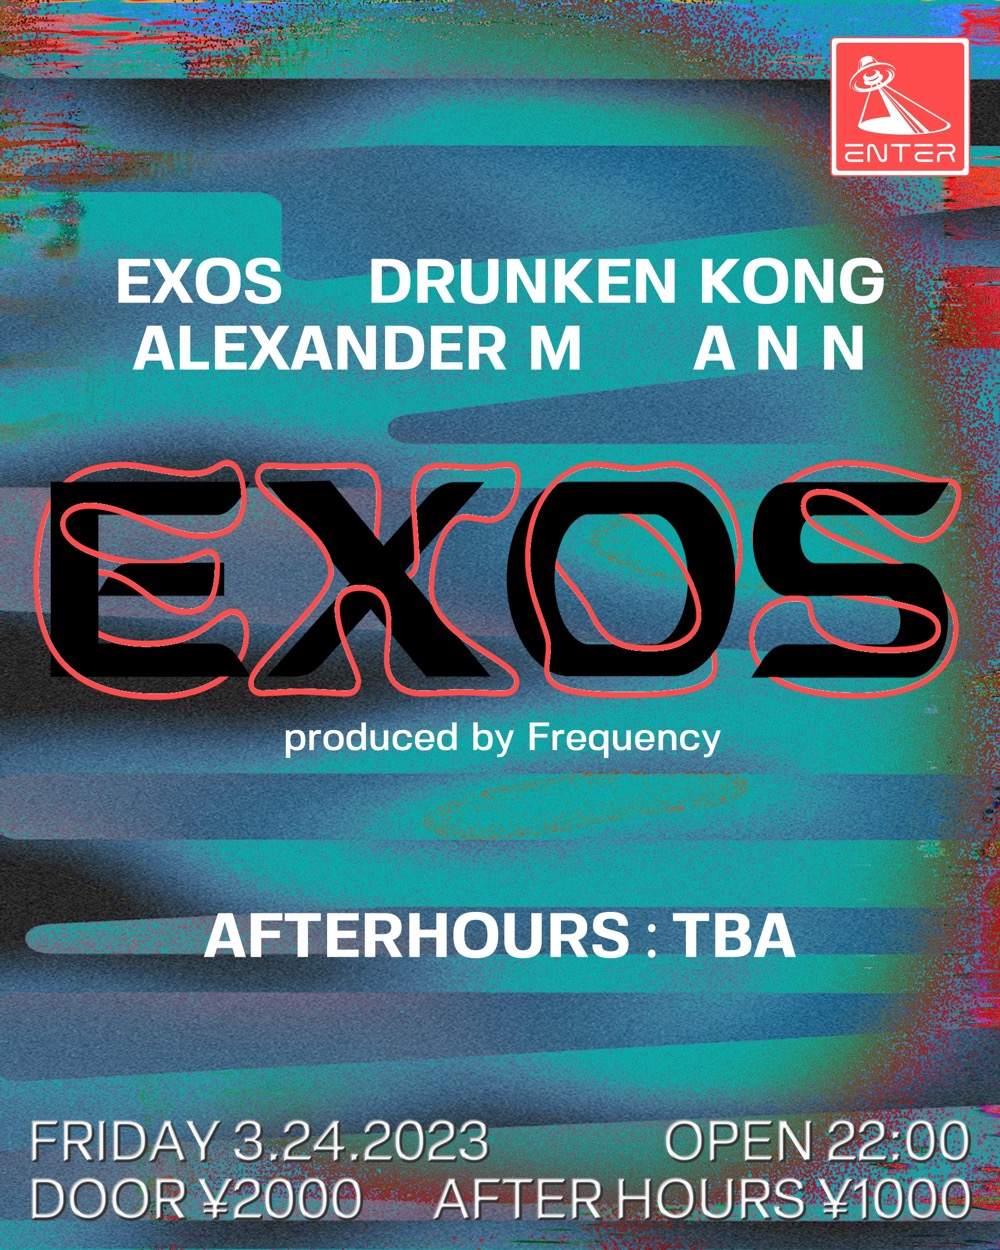 Exos produced by Frequency - Página trasera